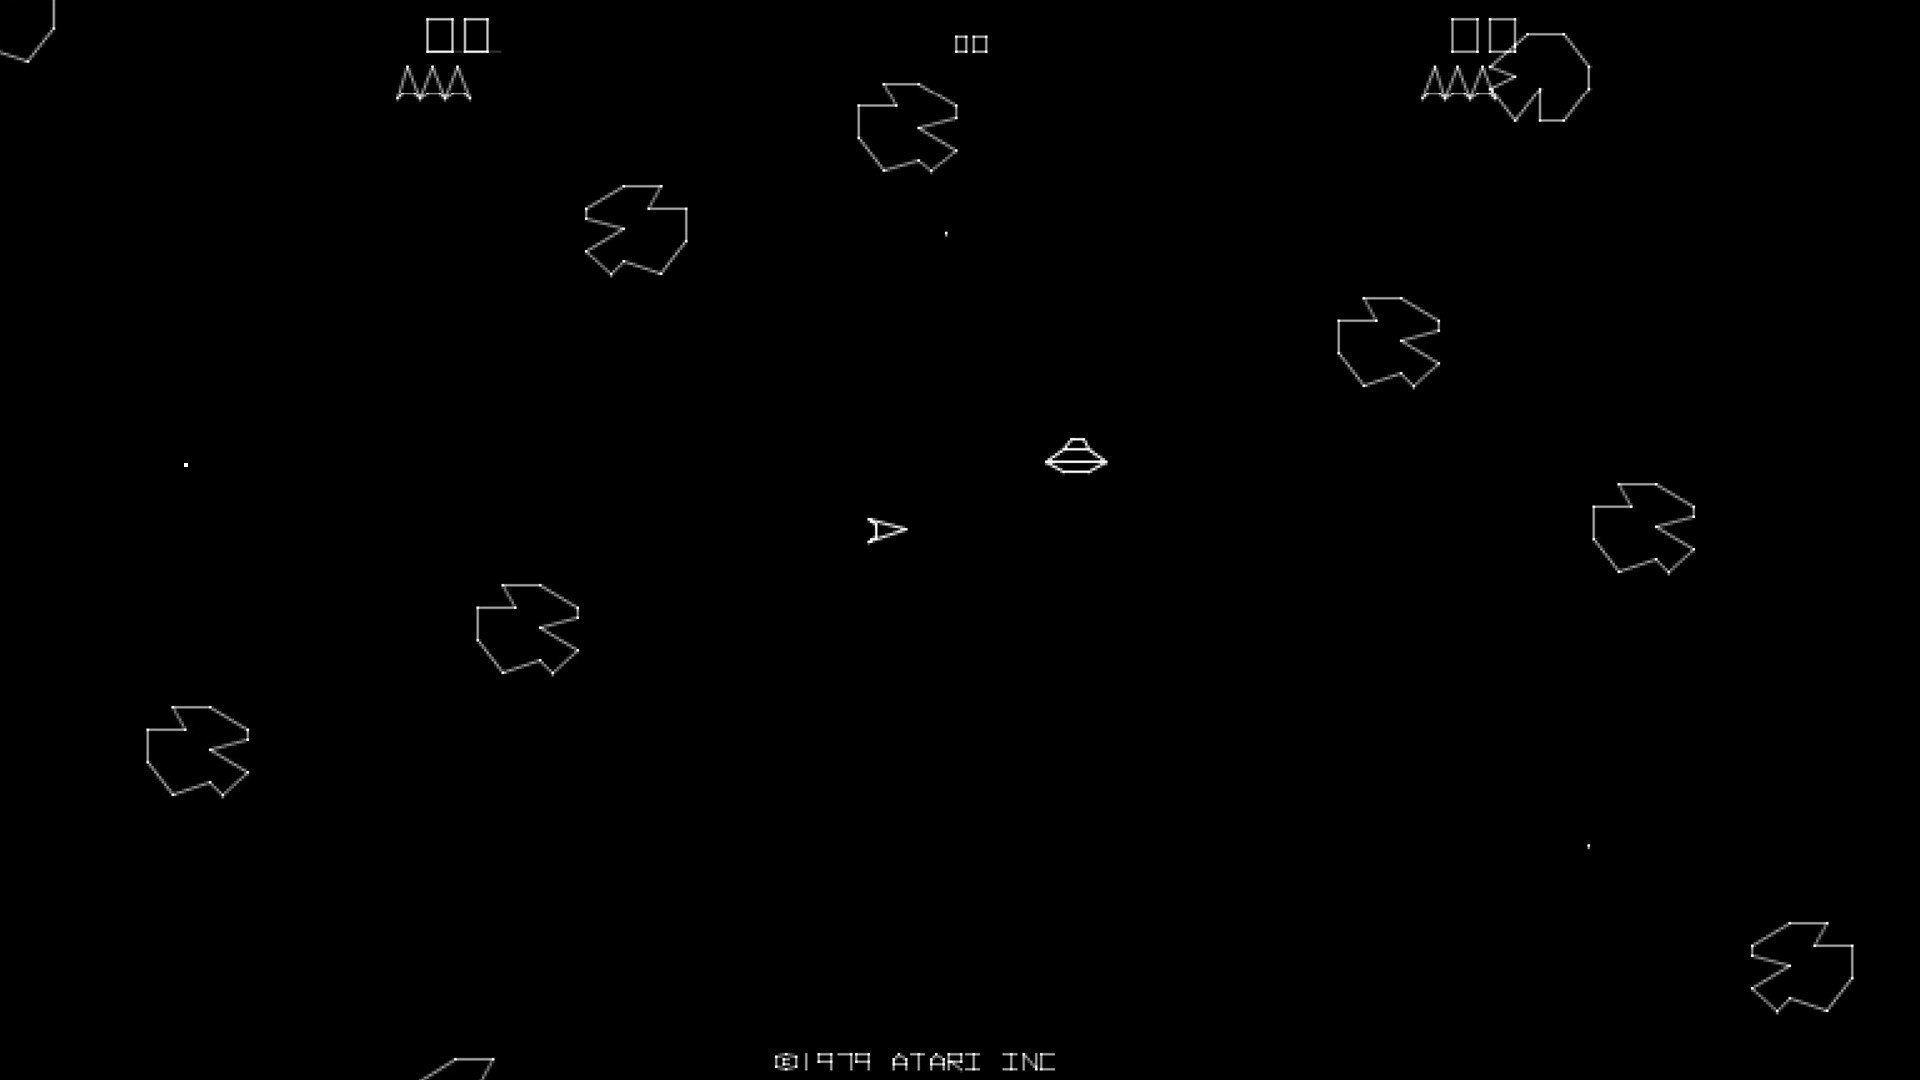 asteroids video game wallpaper